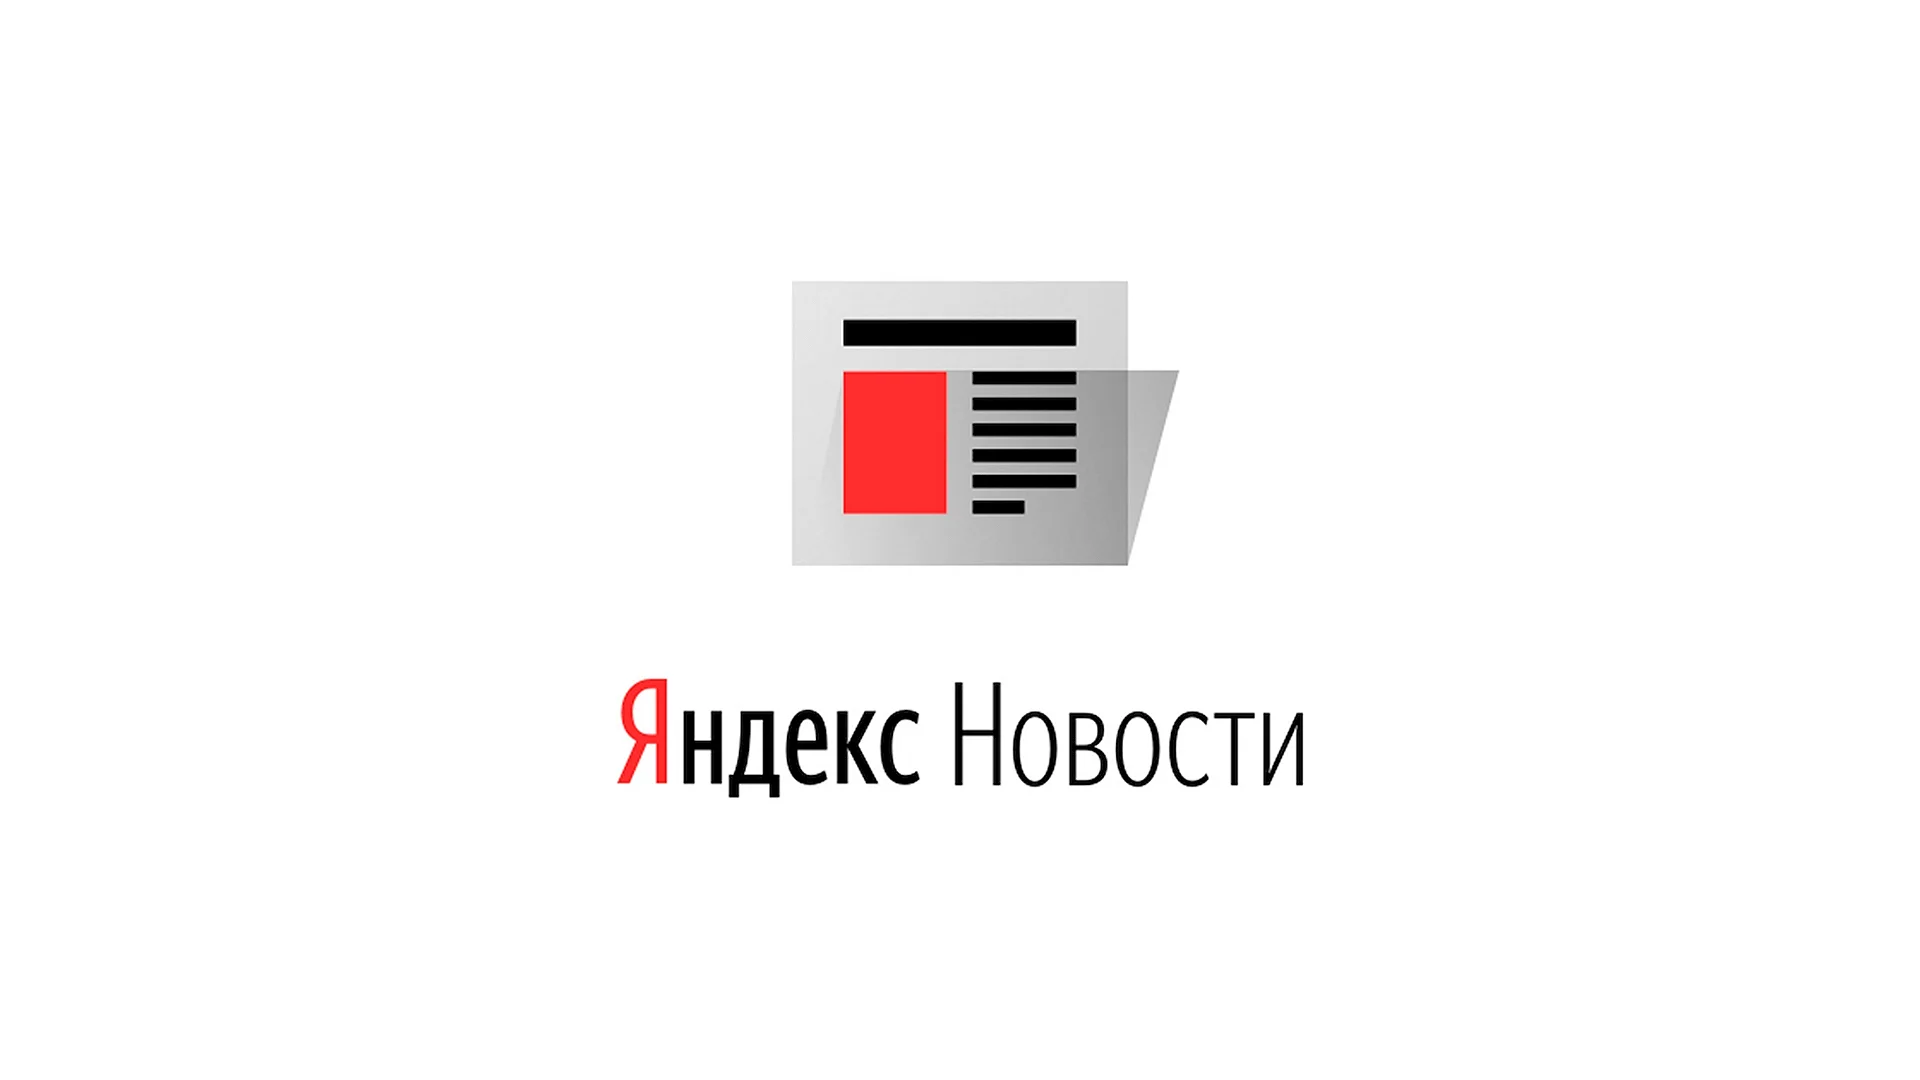 Яндекс новости логотип